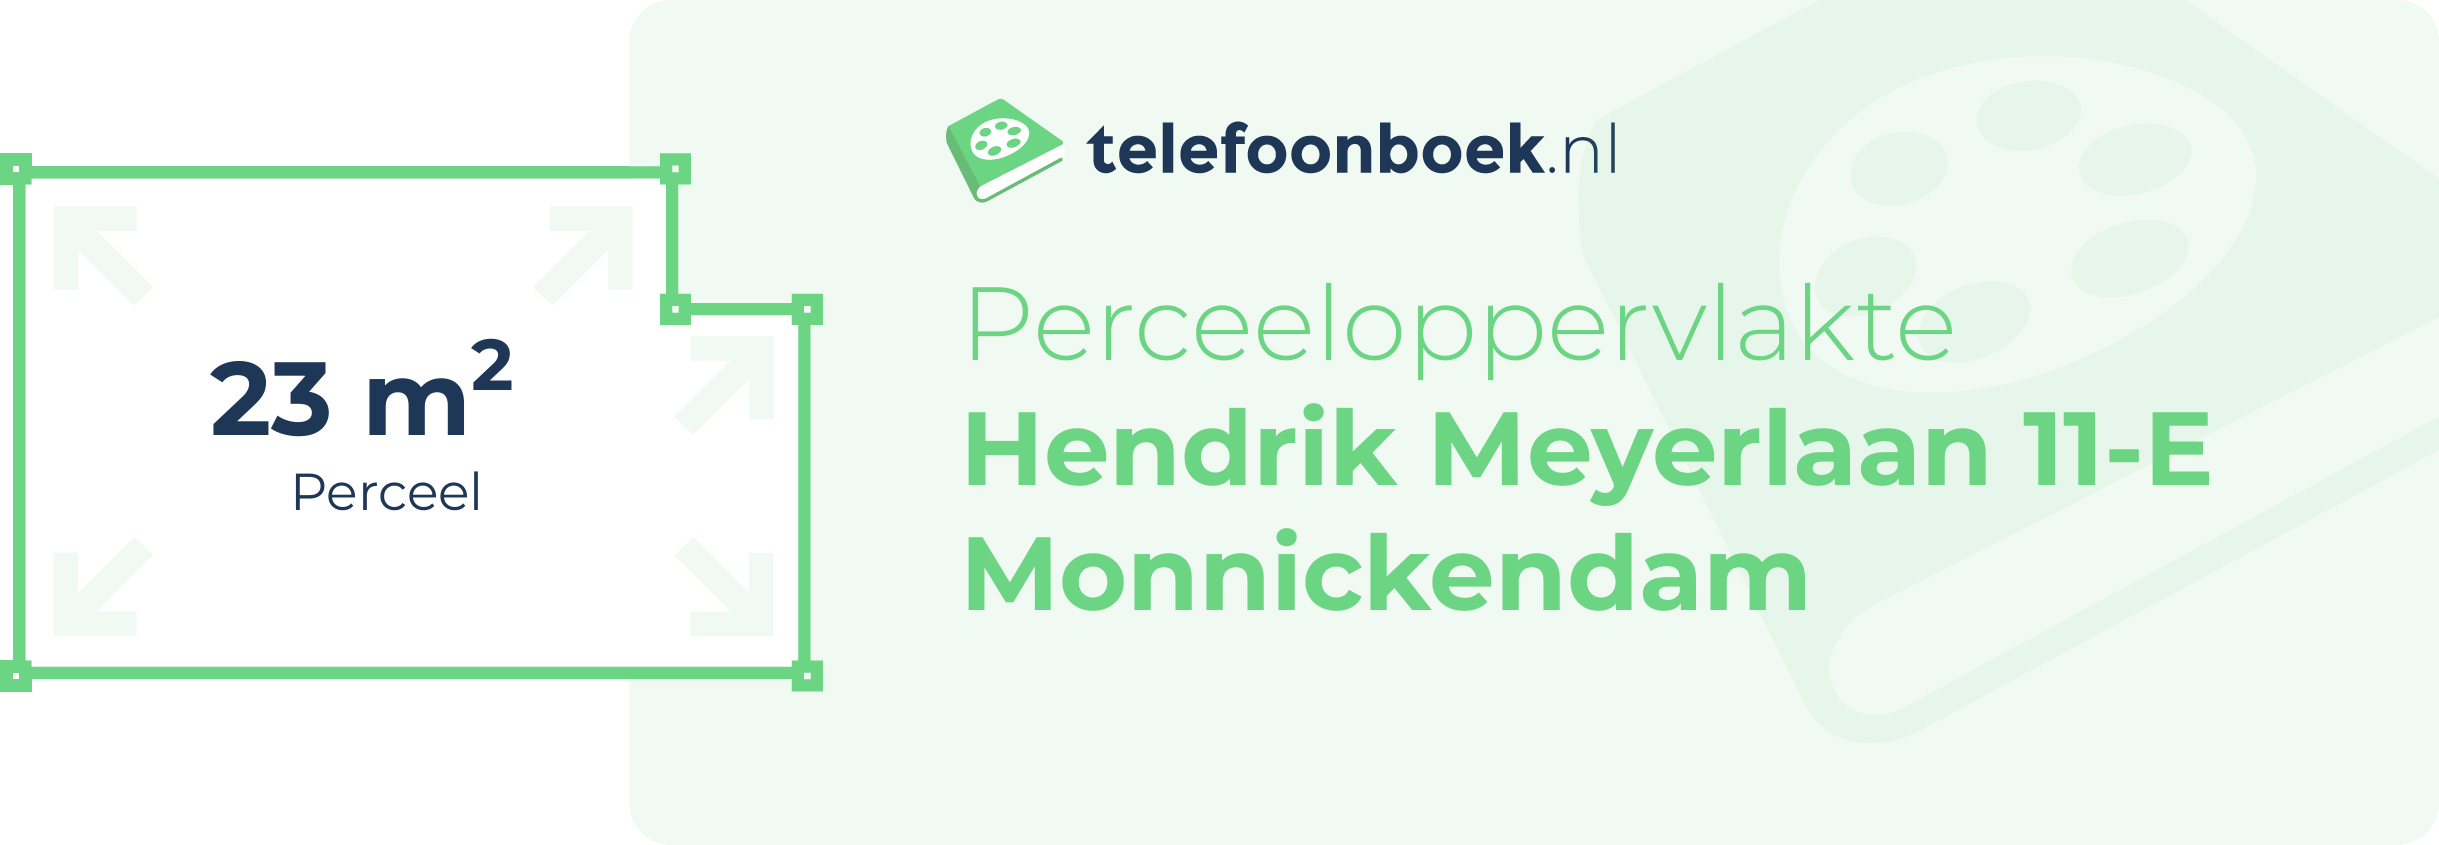 Perceeloppervlakte Hendrik Meyerlaan 11-E Monnickendam